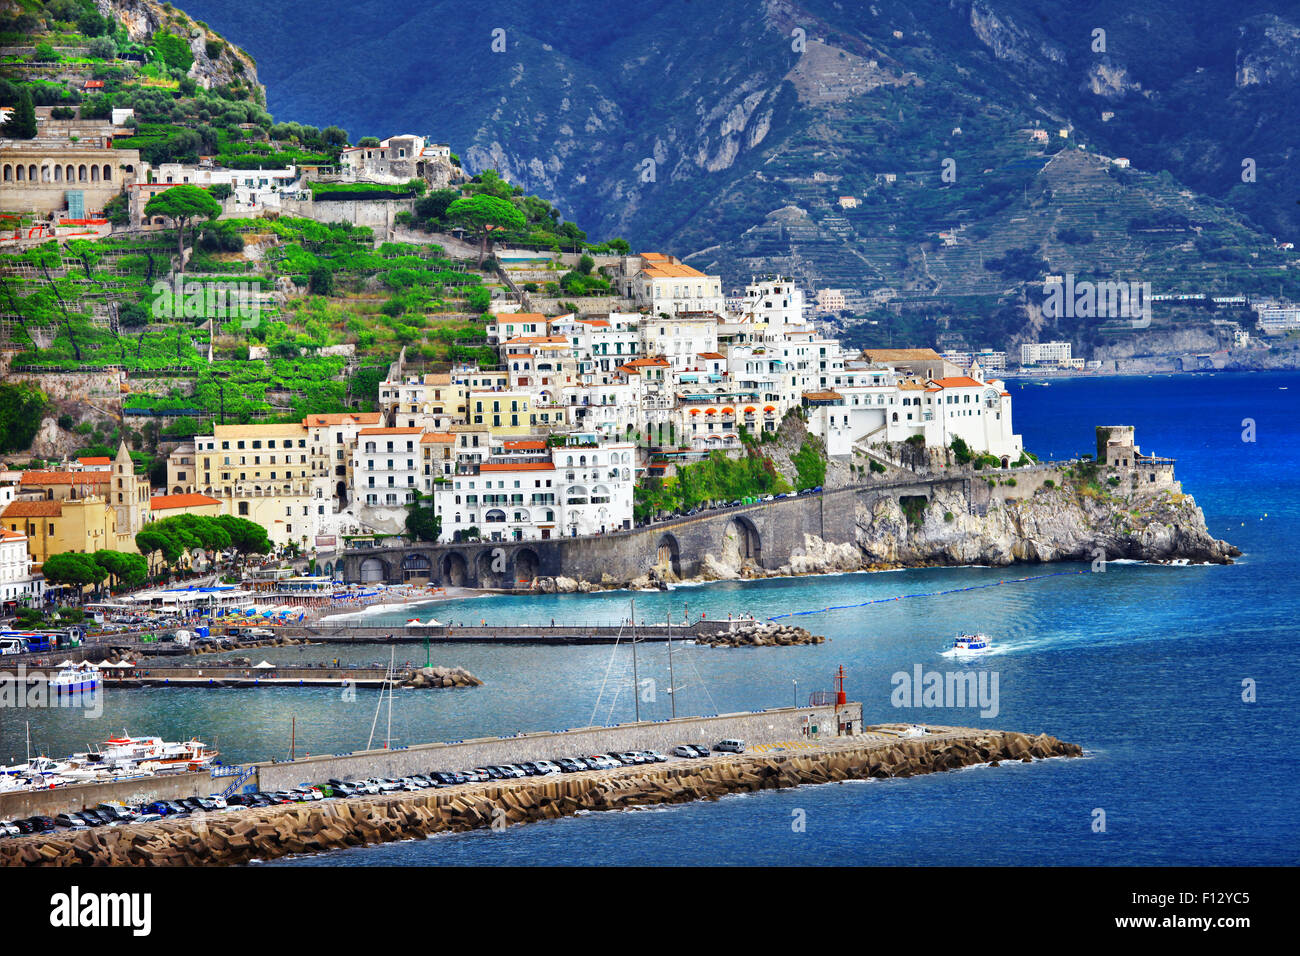 Amazing scenery of Amalfi - beautiful coast of Italy Stock Photo